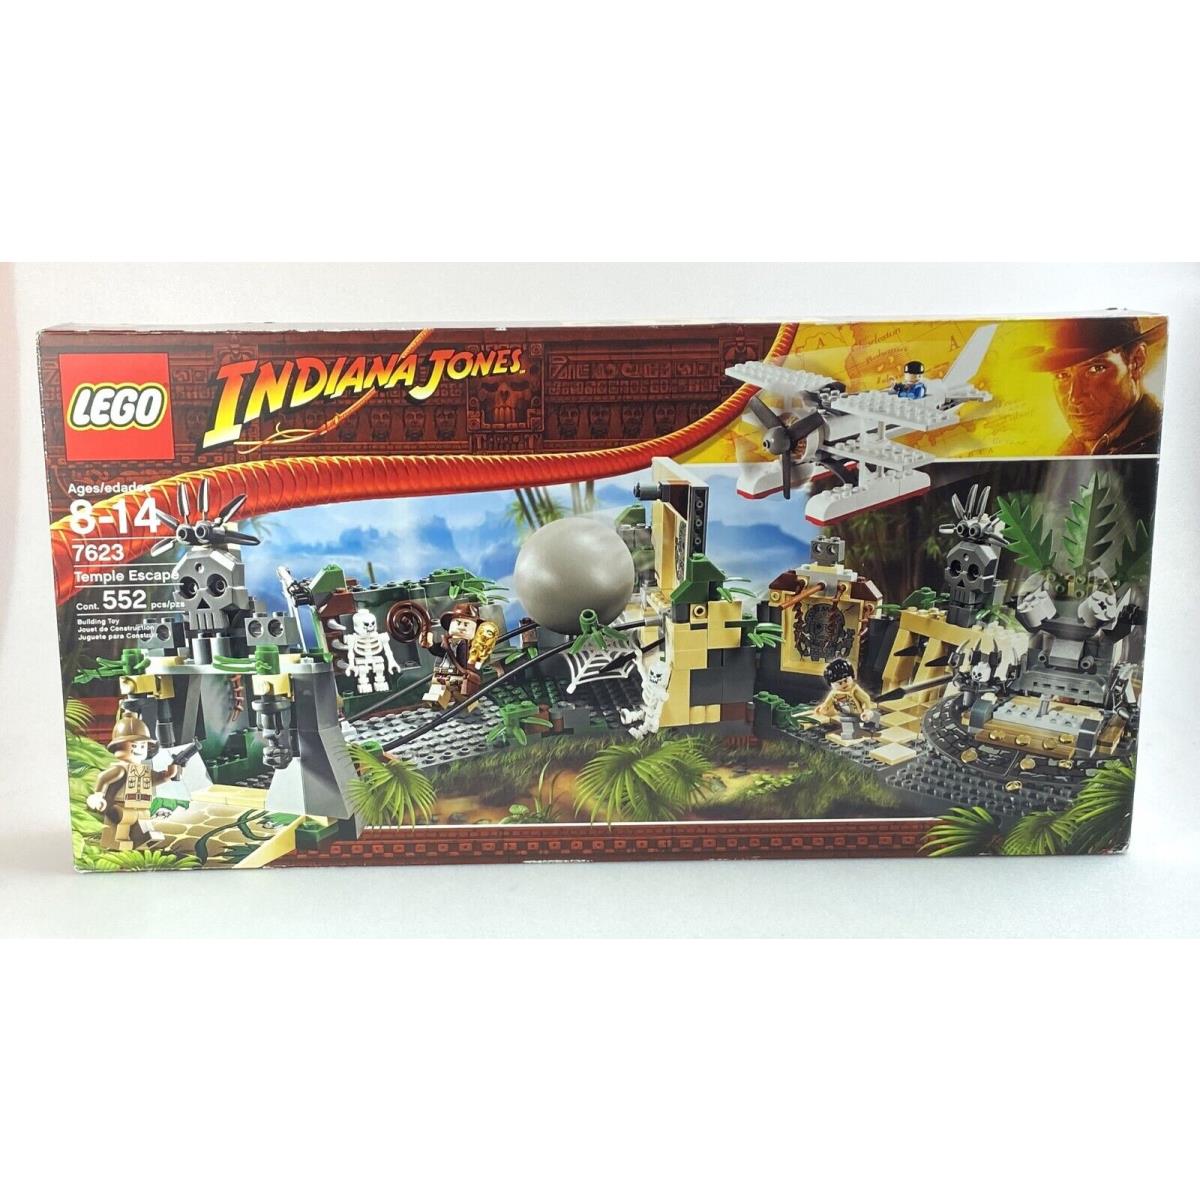 Temple Escape 7623 Lego Indiana Jones Set Unopened Retired